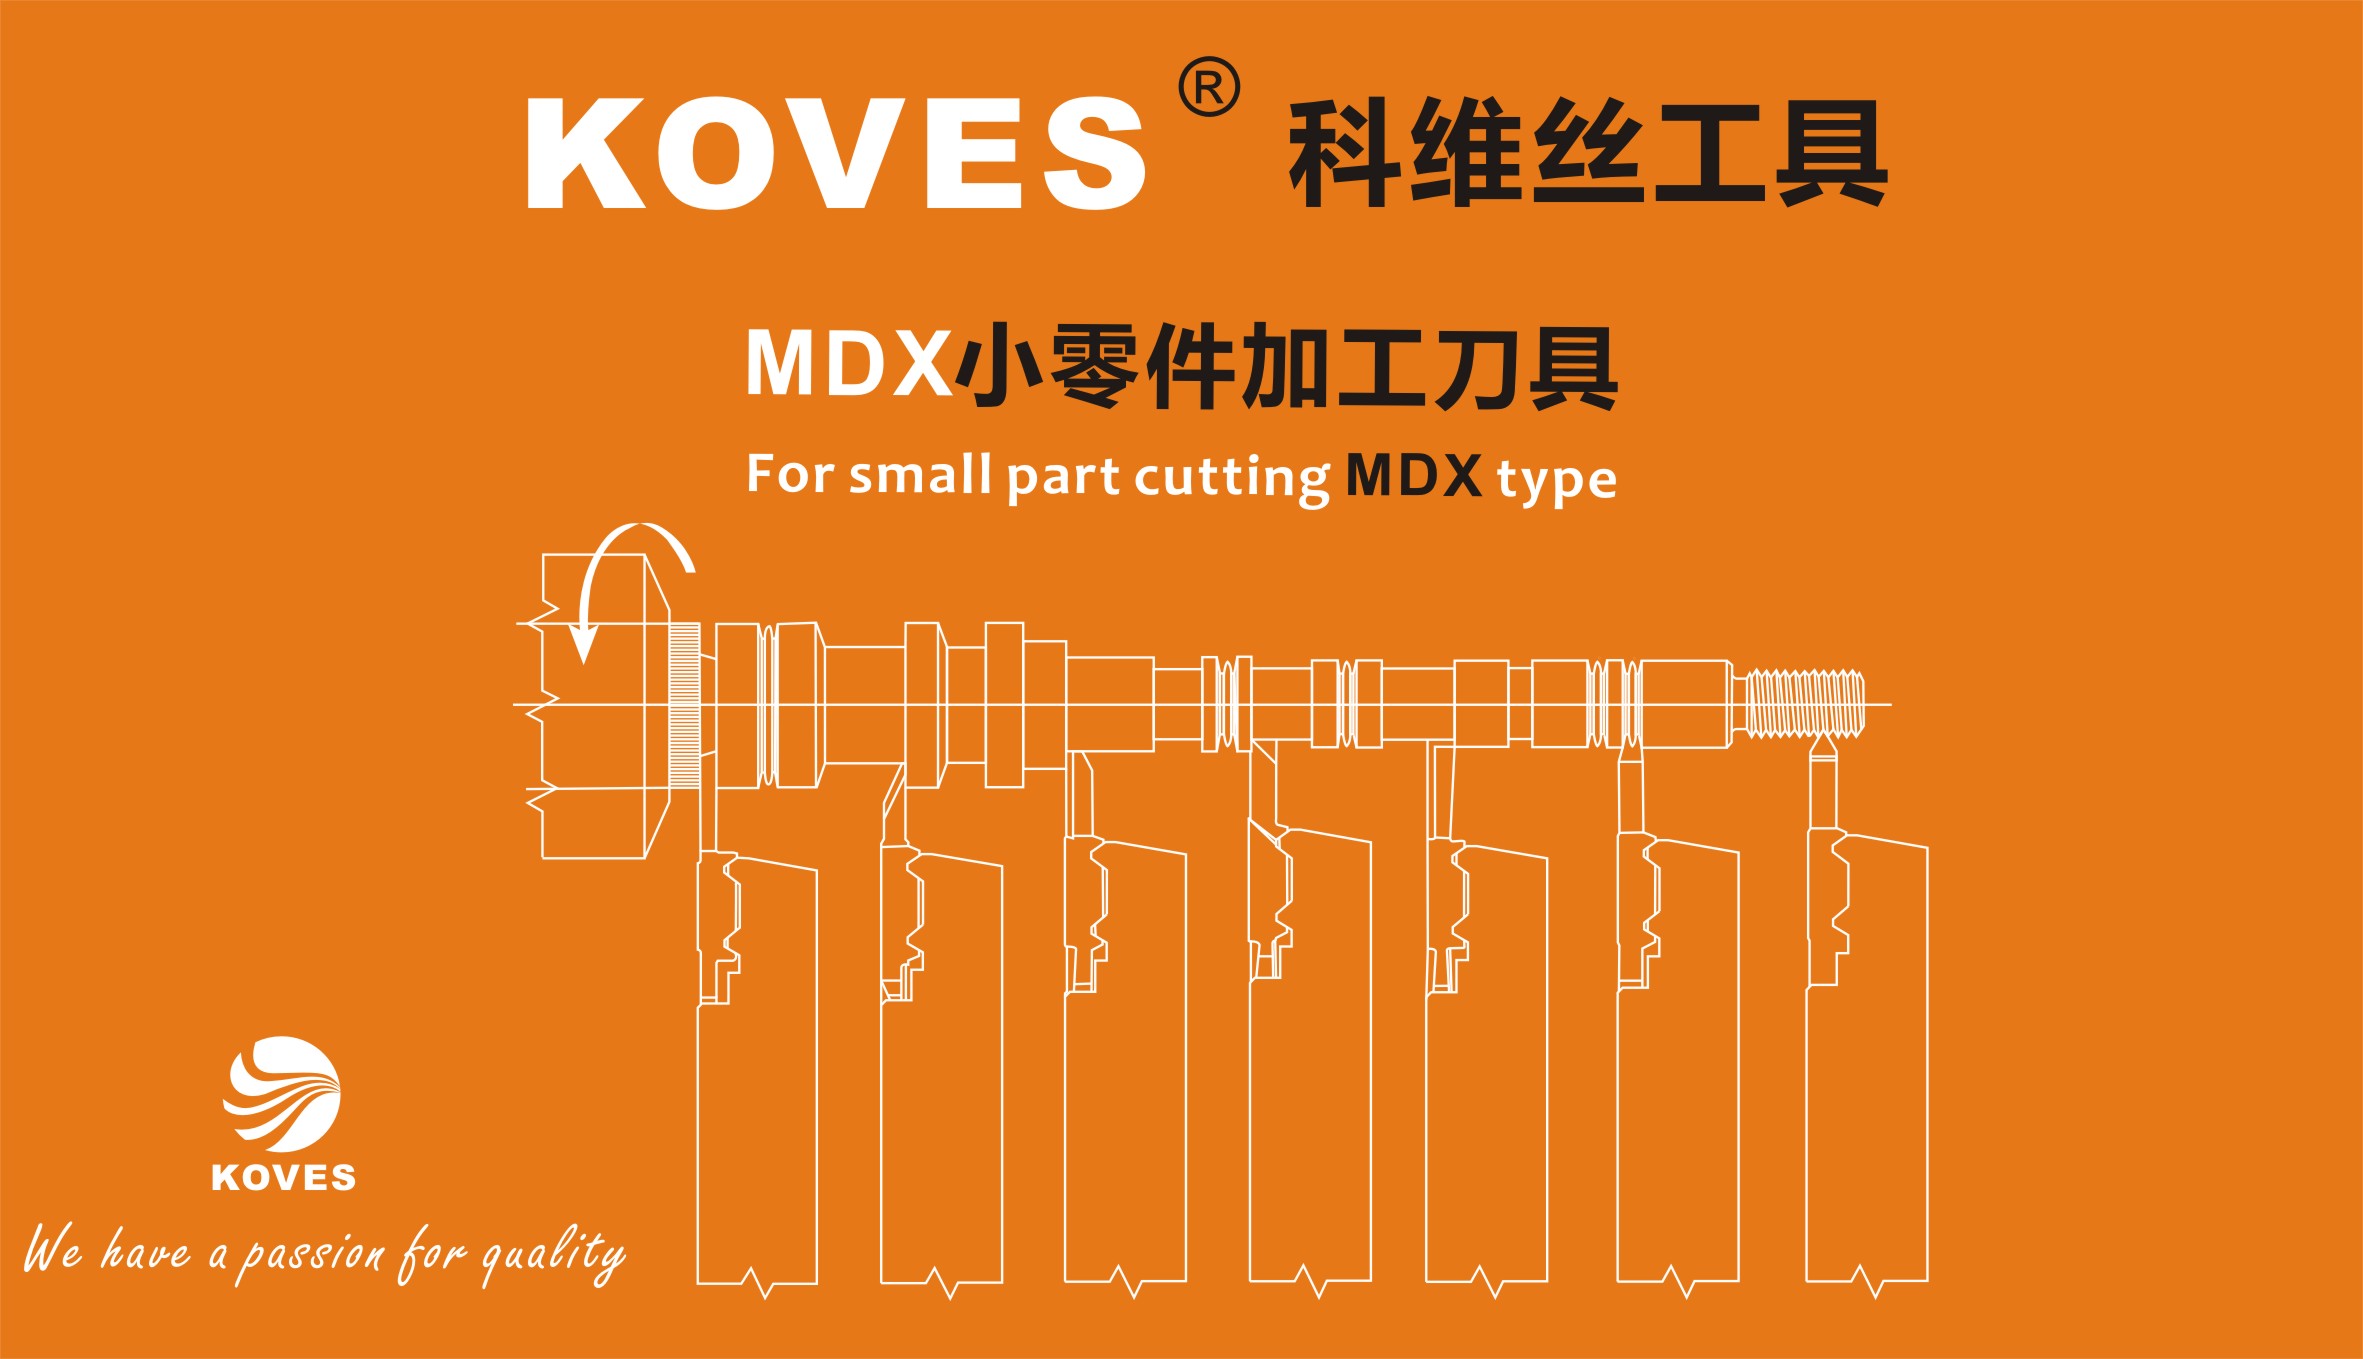 MDX小零件加工刀具